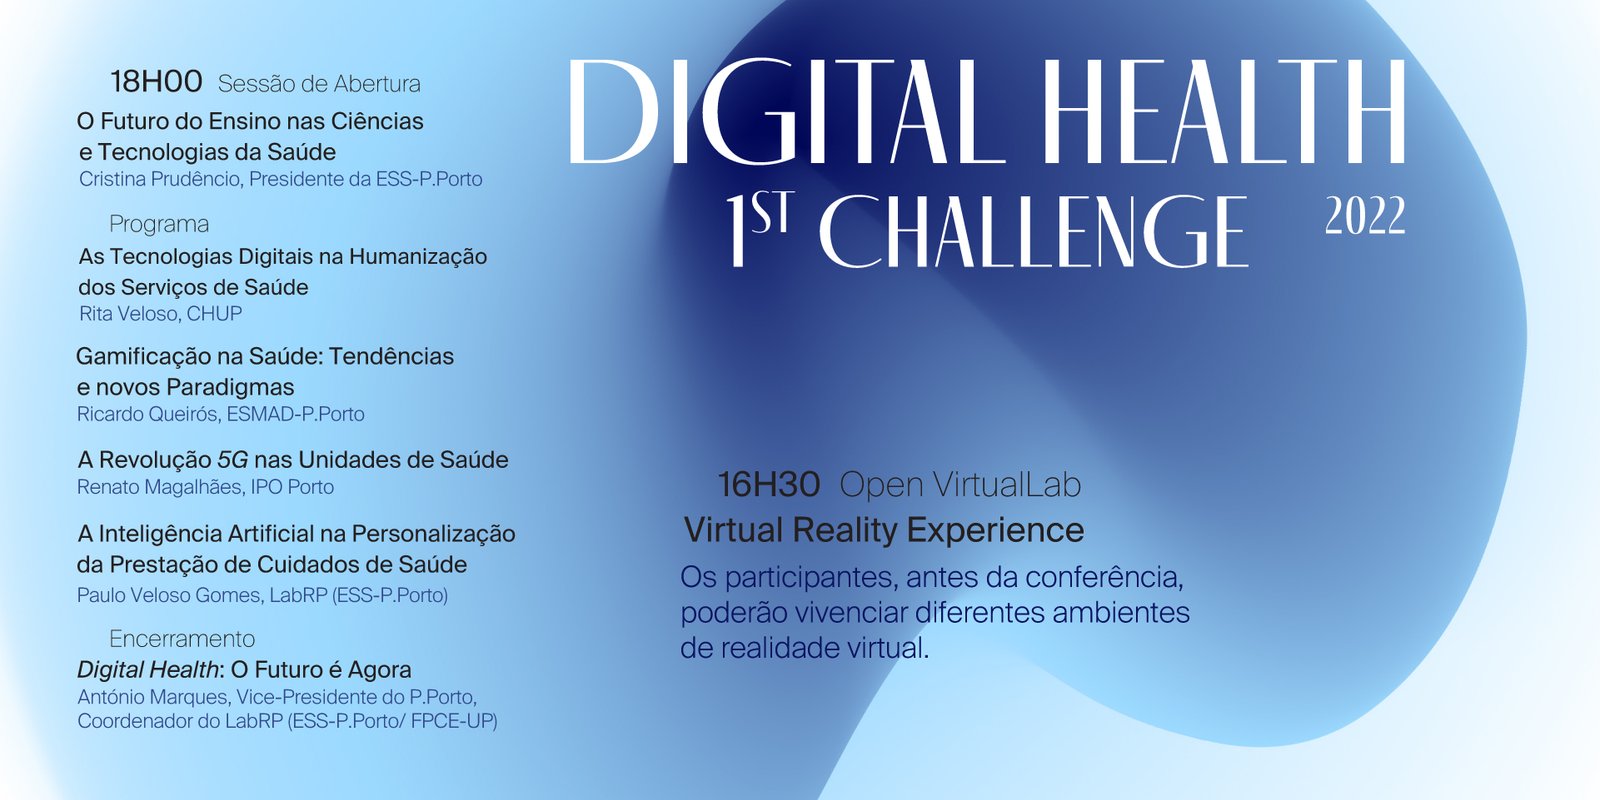 Programa Digital Health 2022 1St Challenge